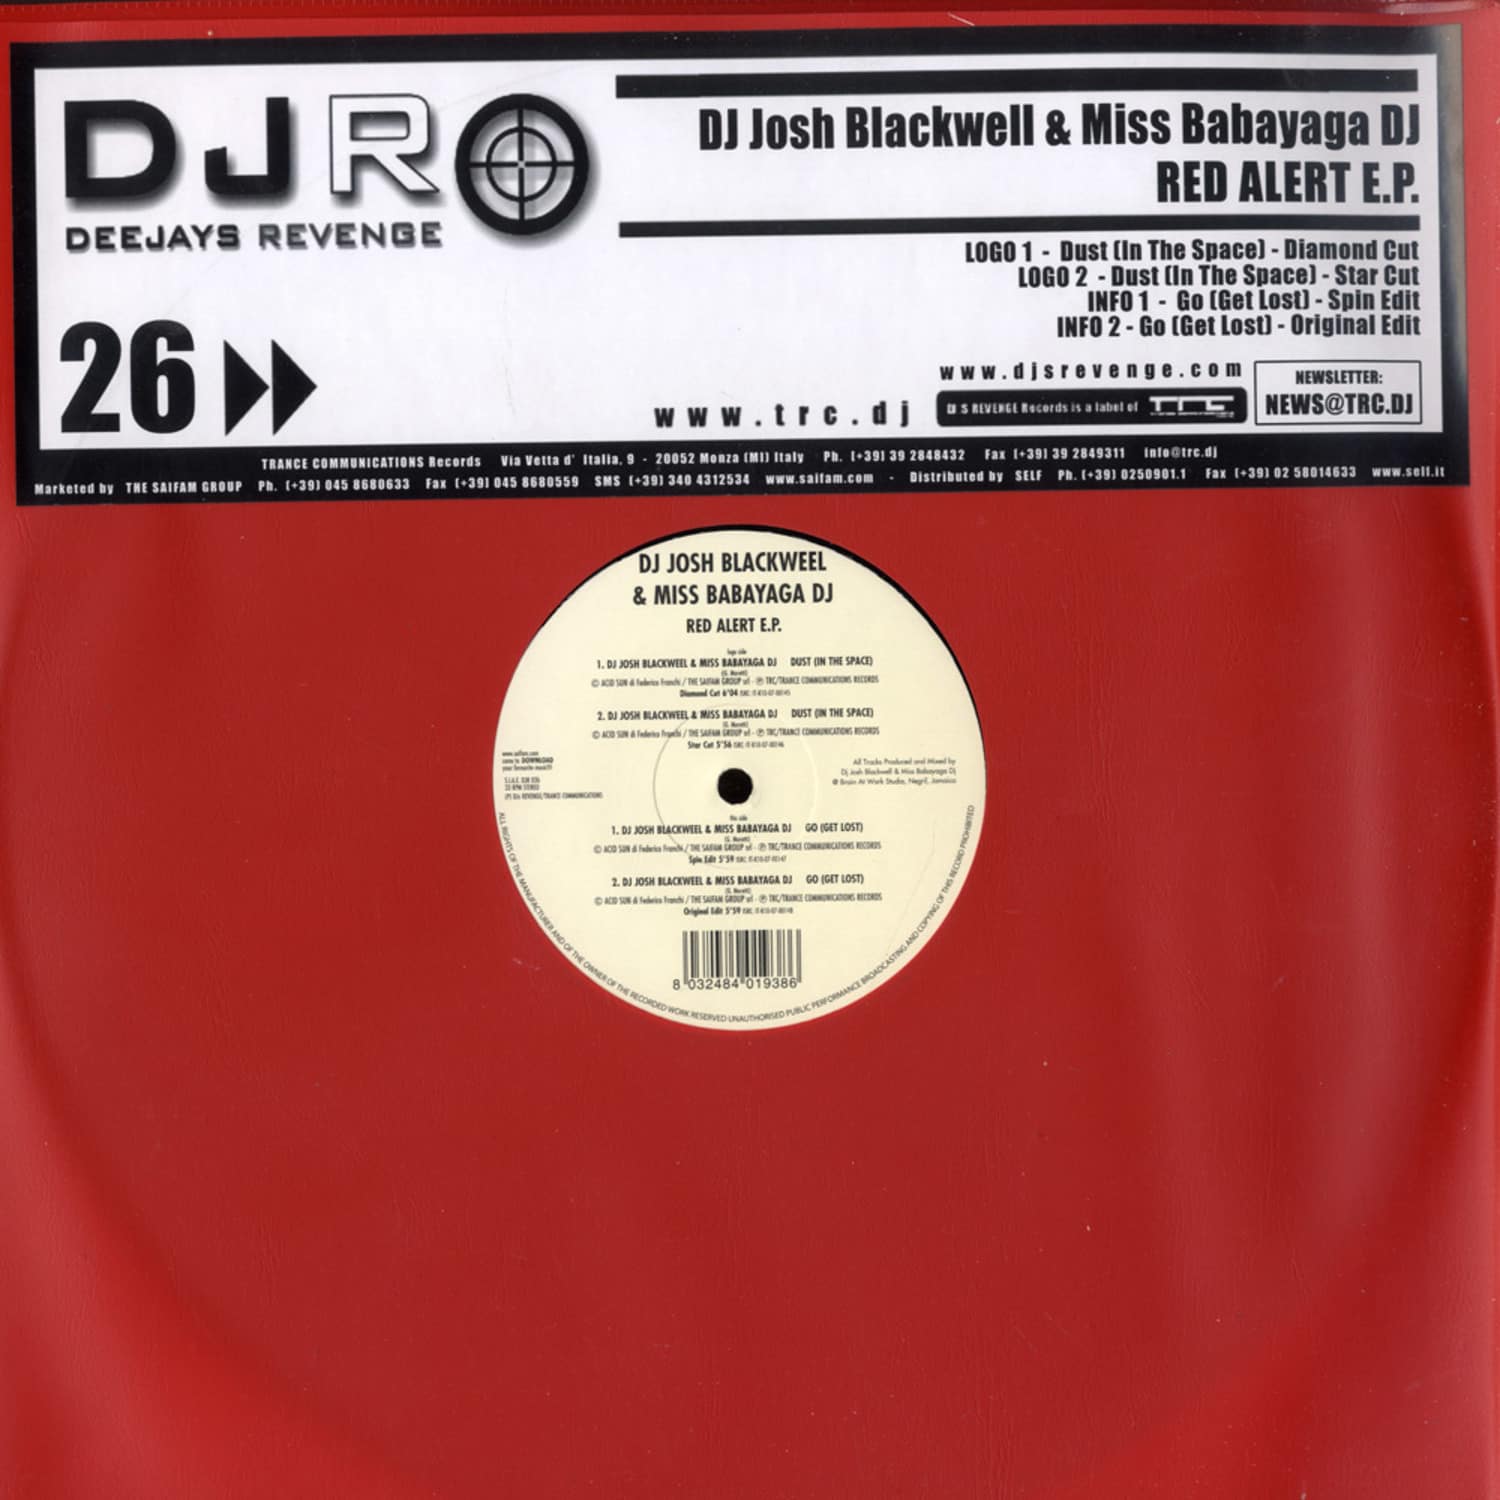 Dj Josh Blackwell & Miss Babayaga DJ - RED ALERT EP